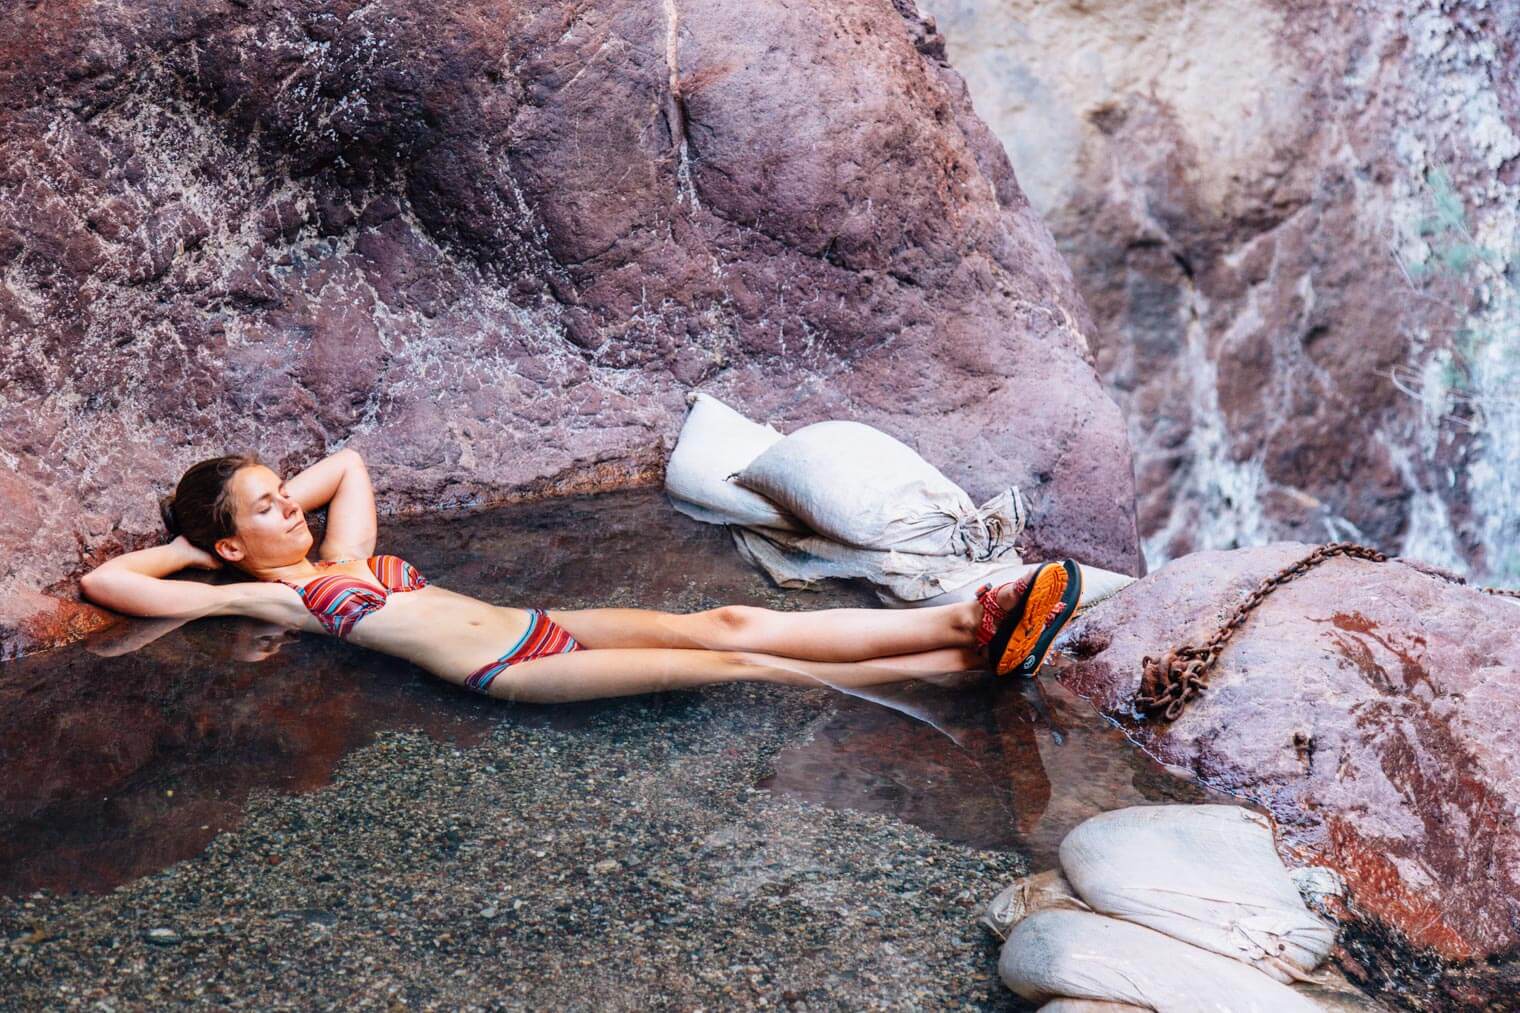 Megan relaxing in ringbolt hot spring